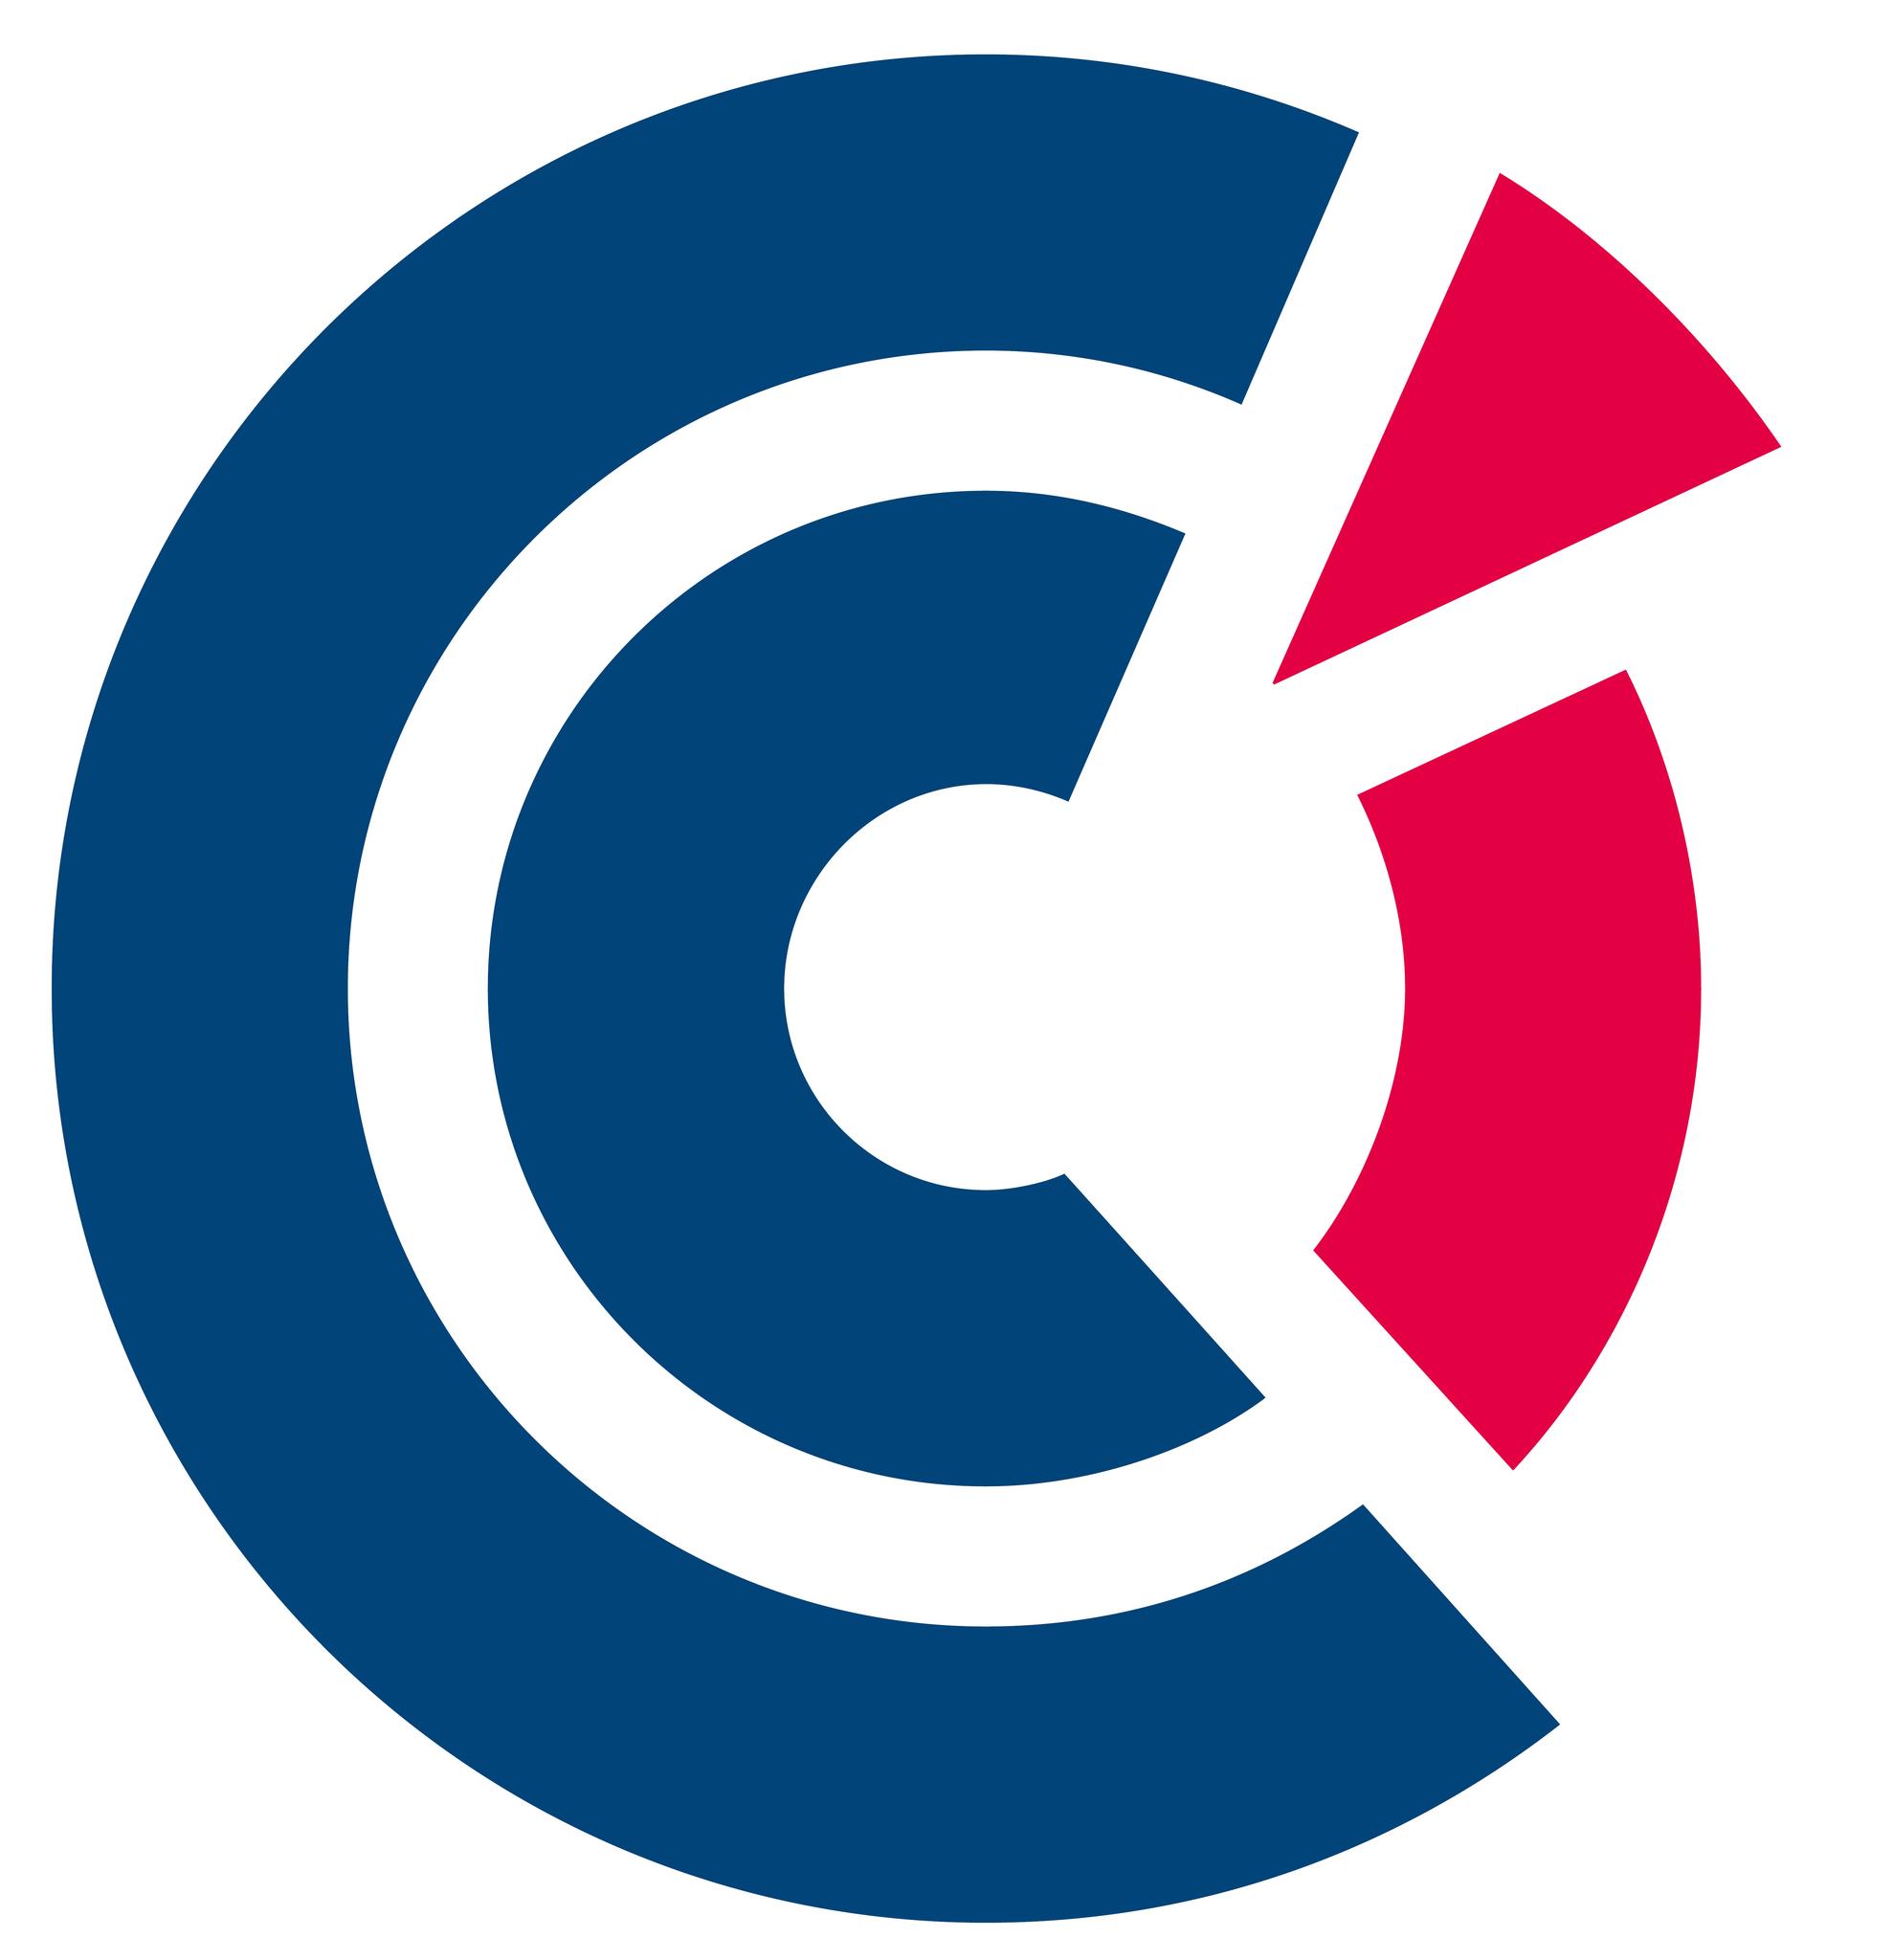 Logo_cci.jpg (88 KB)